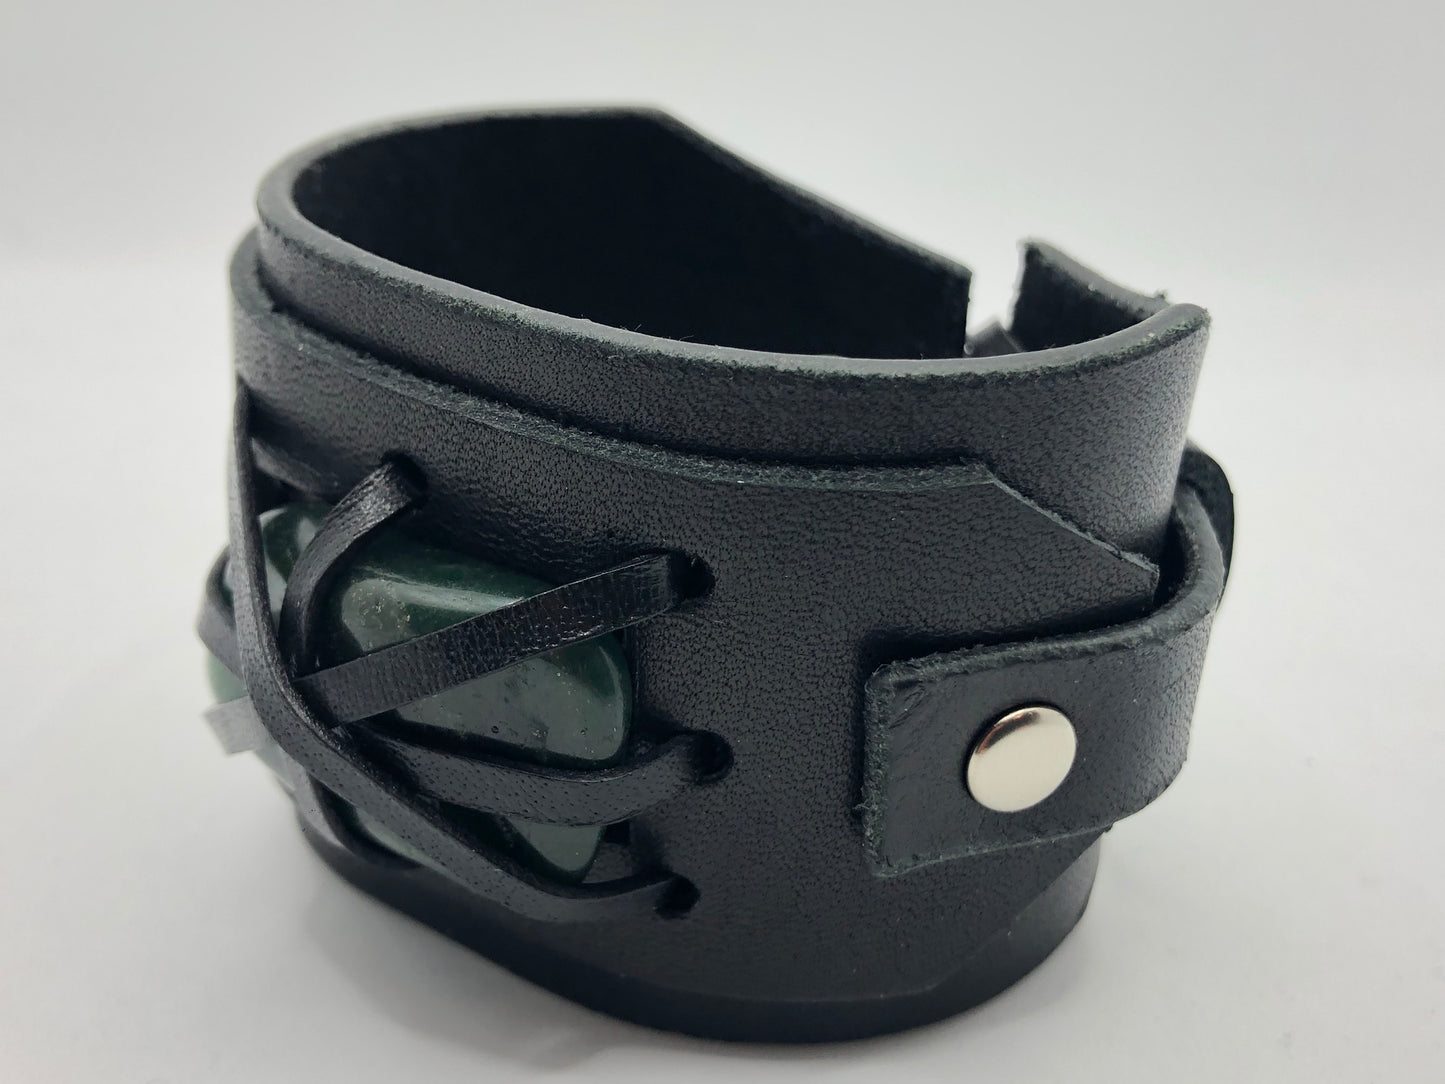 Crystal Wrap Wristband / Bracelet- Black Leather